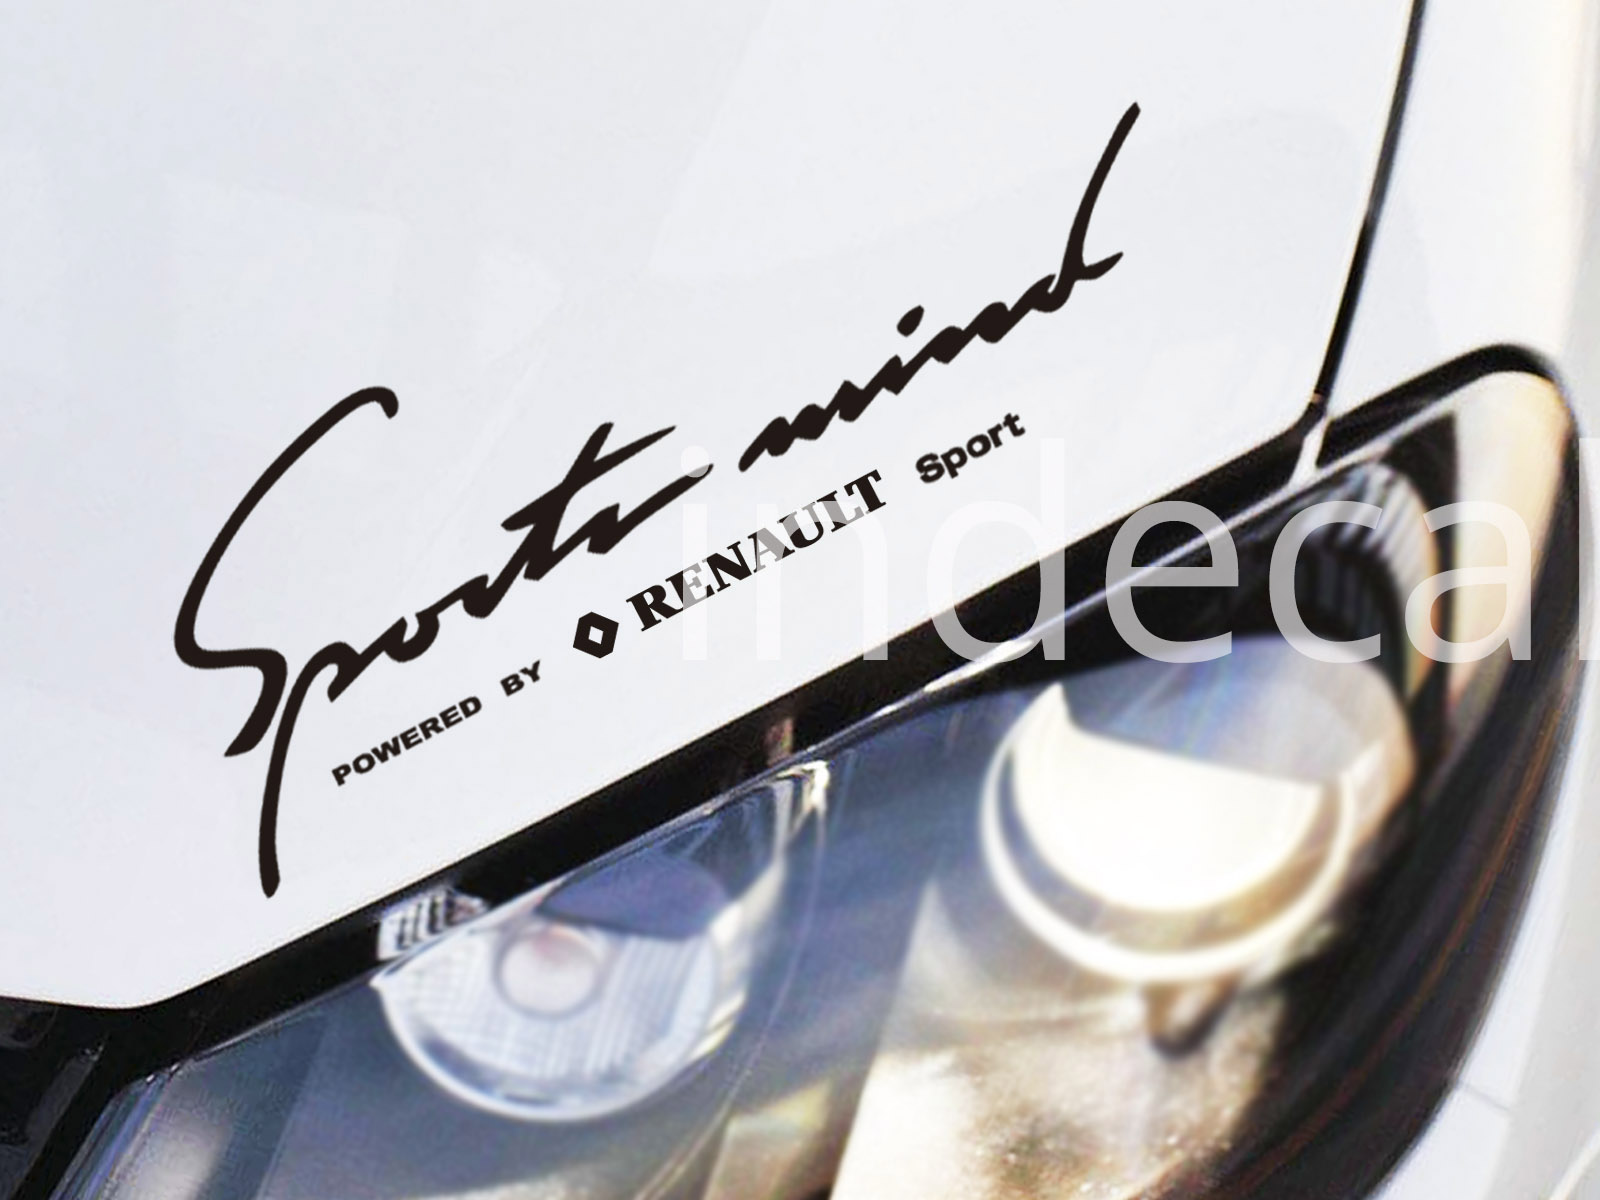 1 x Renault Sports Mind Sticker - Black